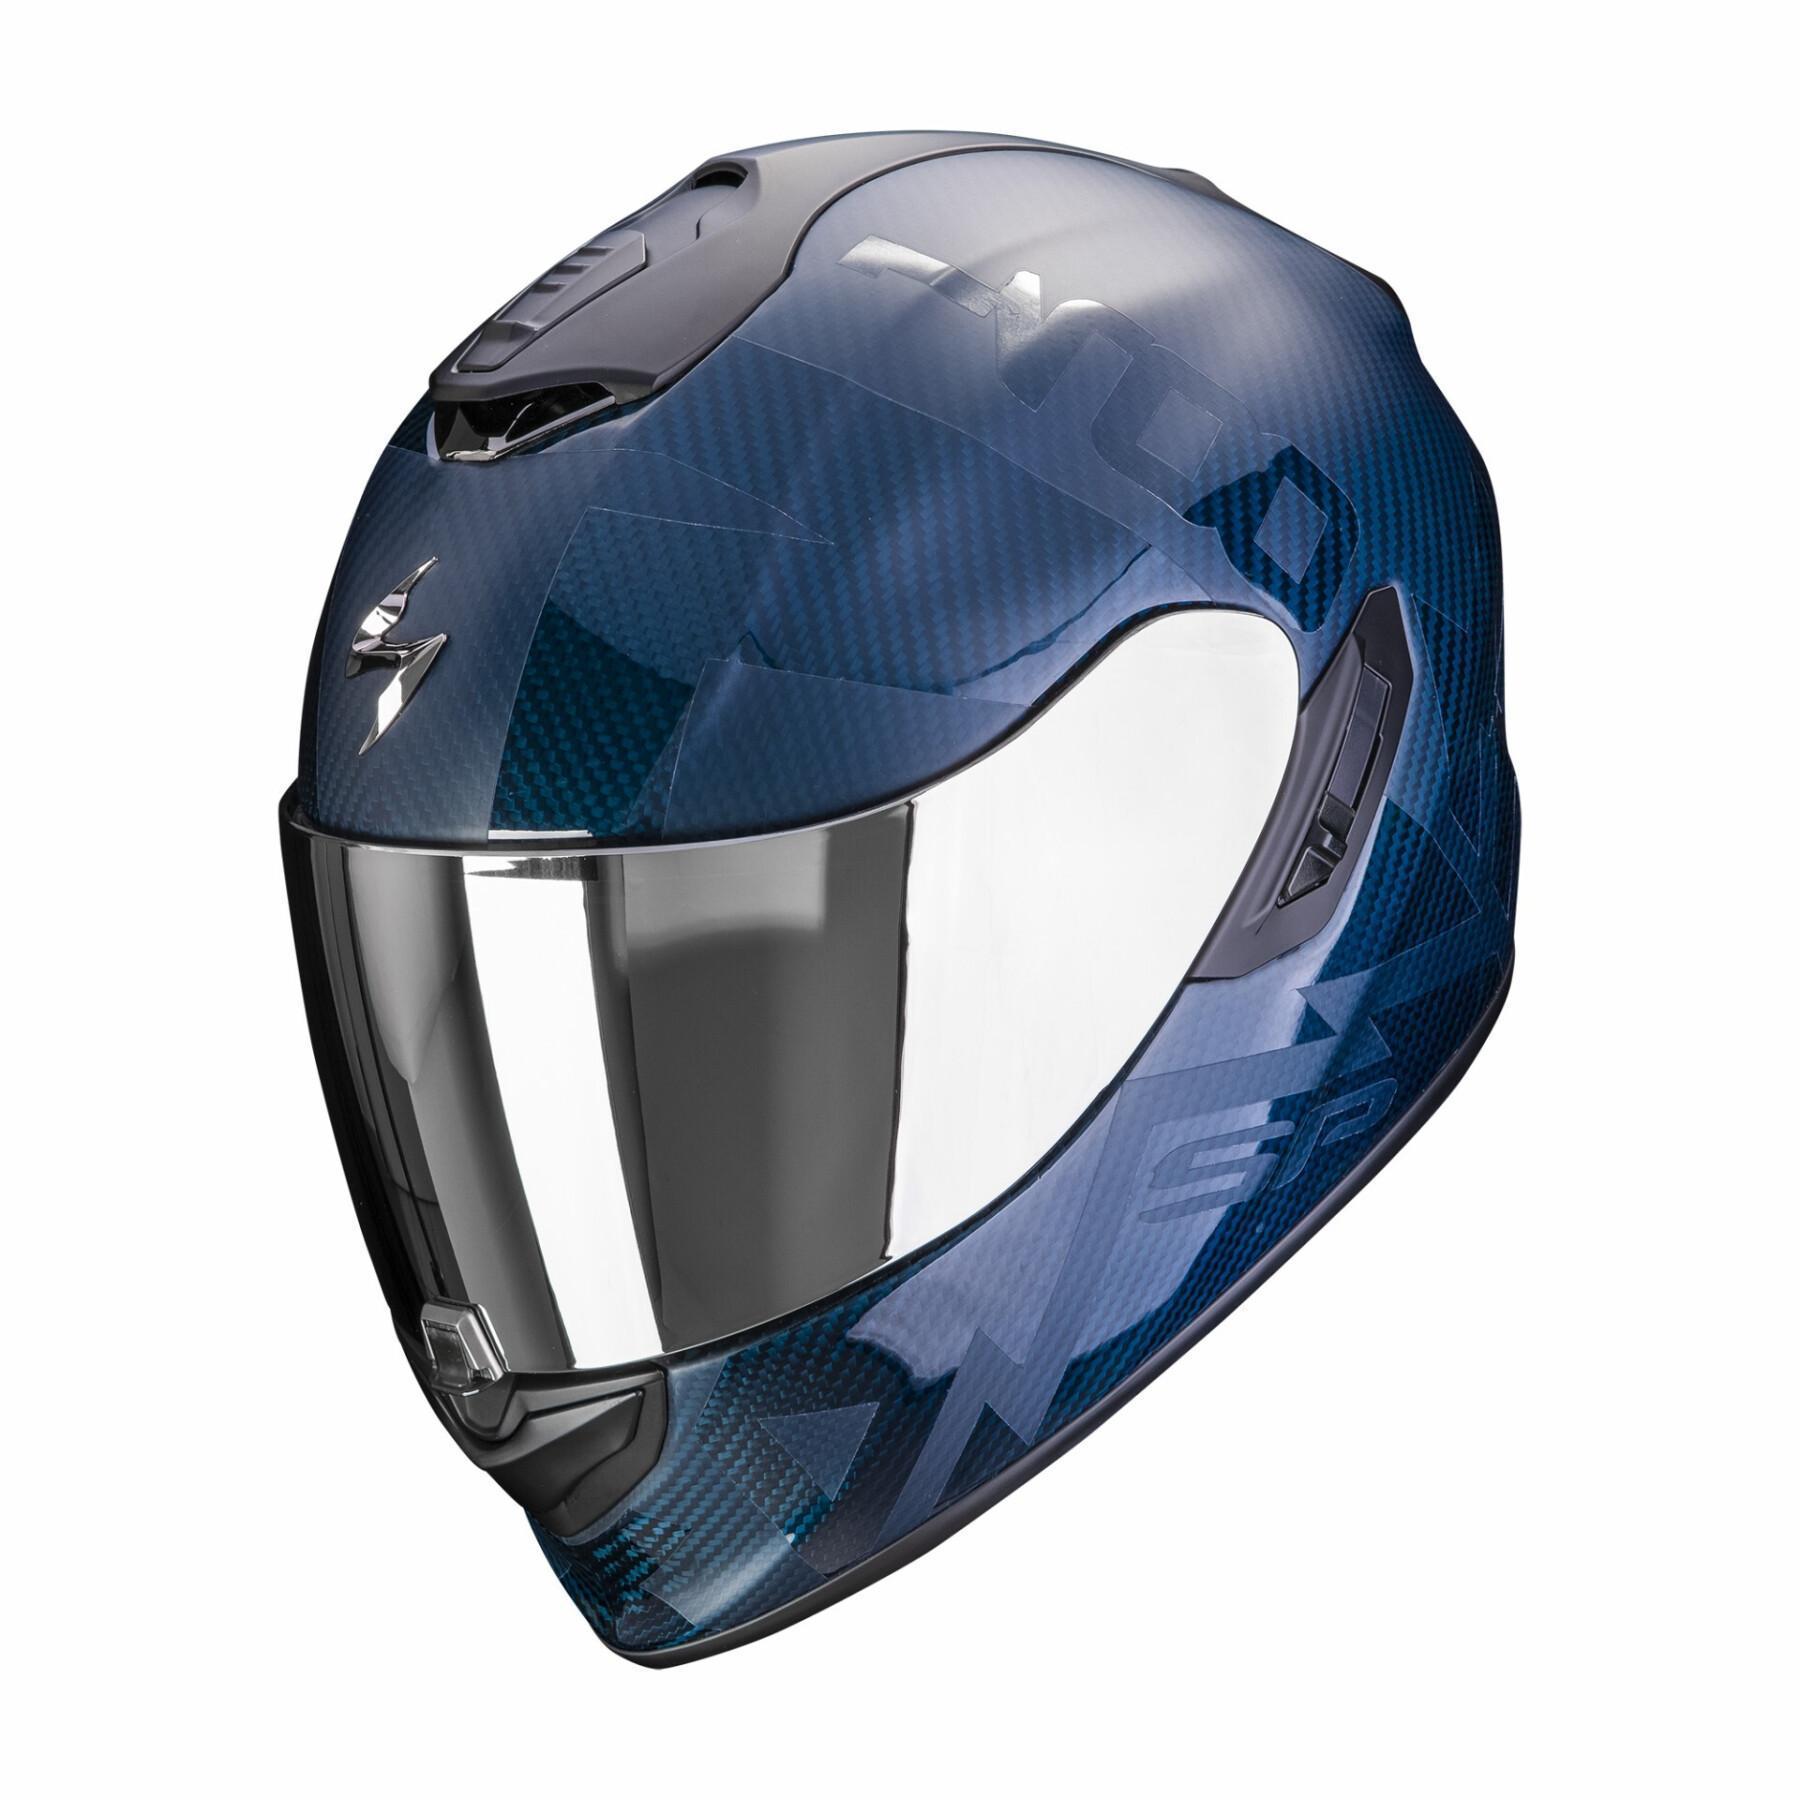 Full face motorcycle helmet Scorpion Exo-1400 Evo Carbon Air Cerebro ECE 22-06